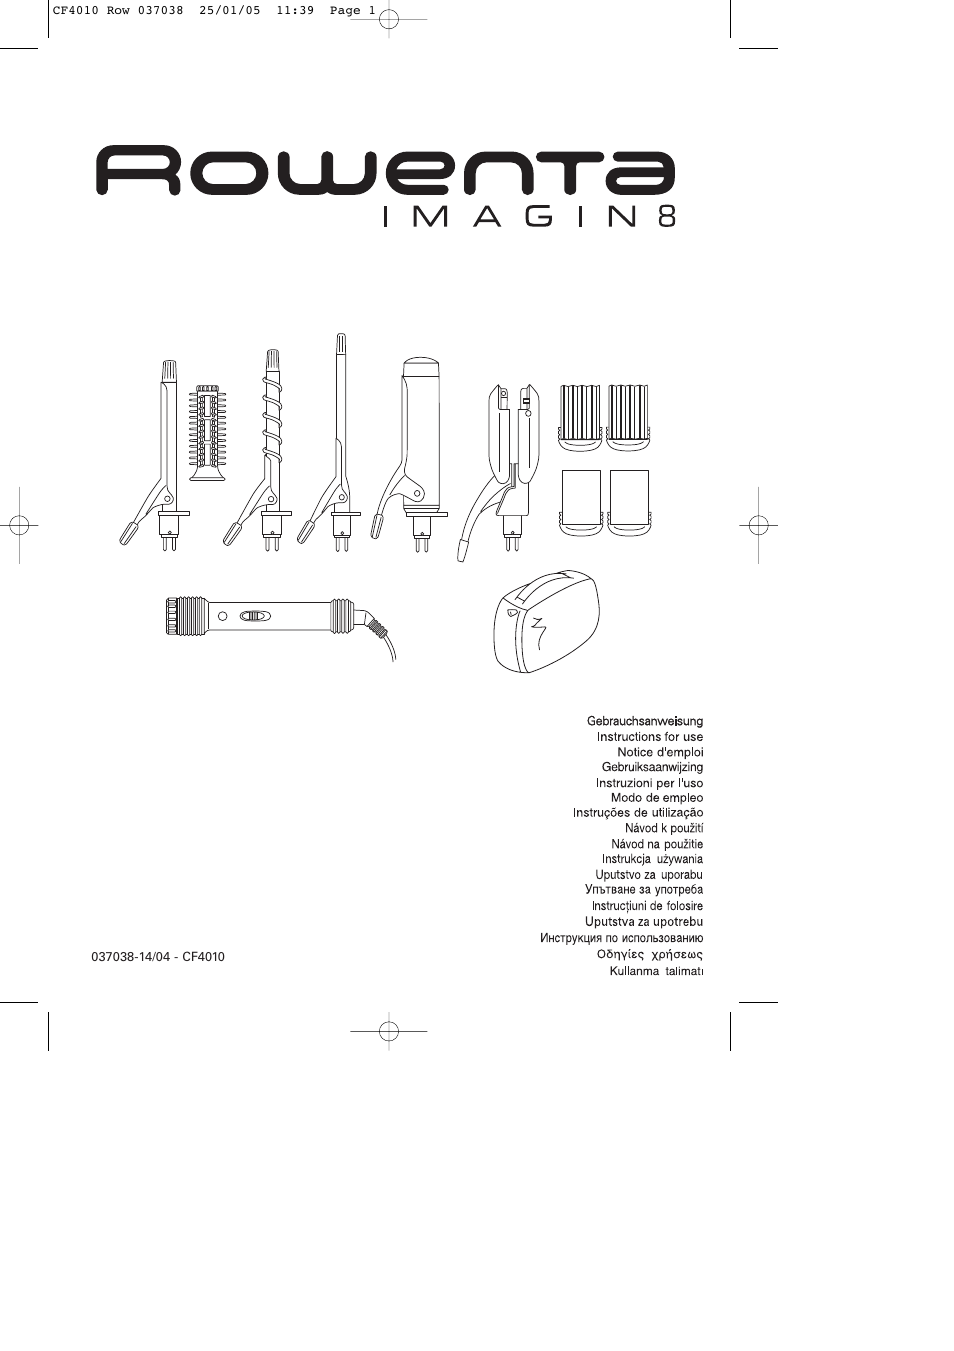 ROWENTA CURLING TONGS IMAGIN' STYLE 8 CF4010 User Manual | 68 pages